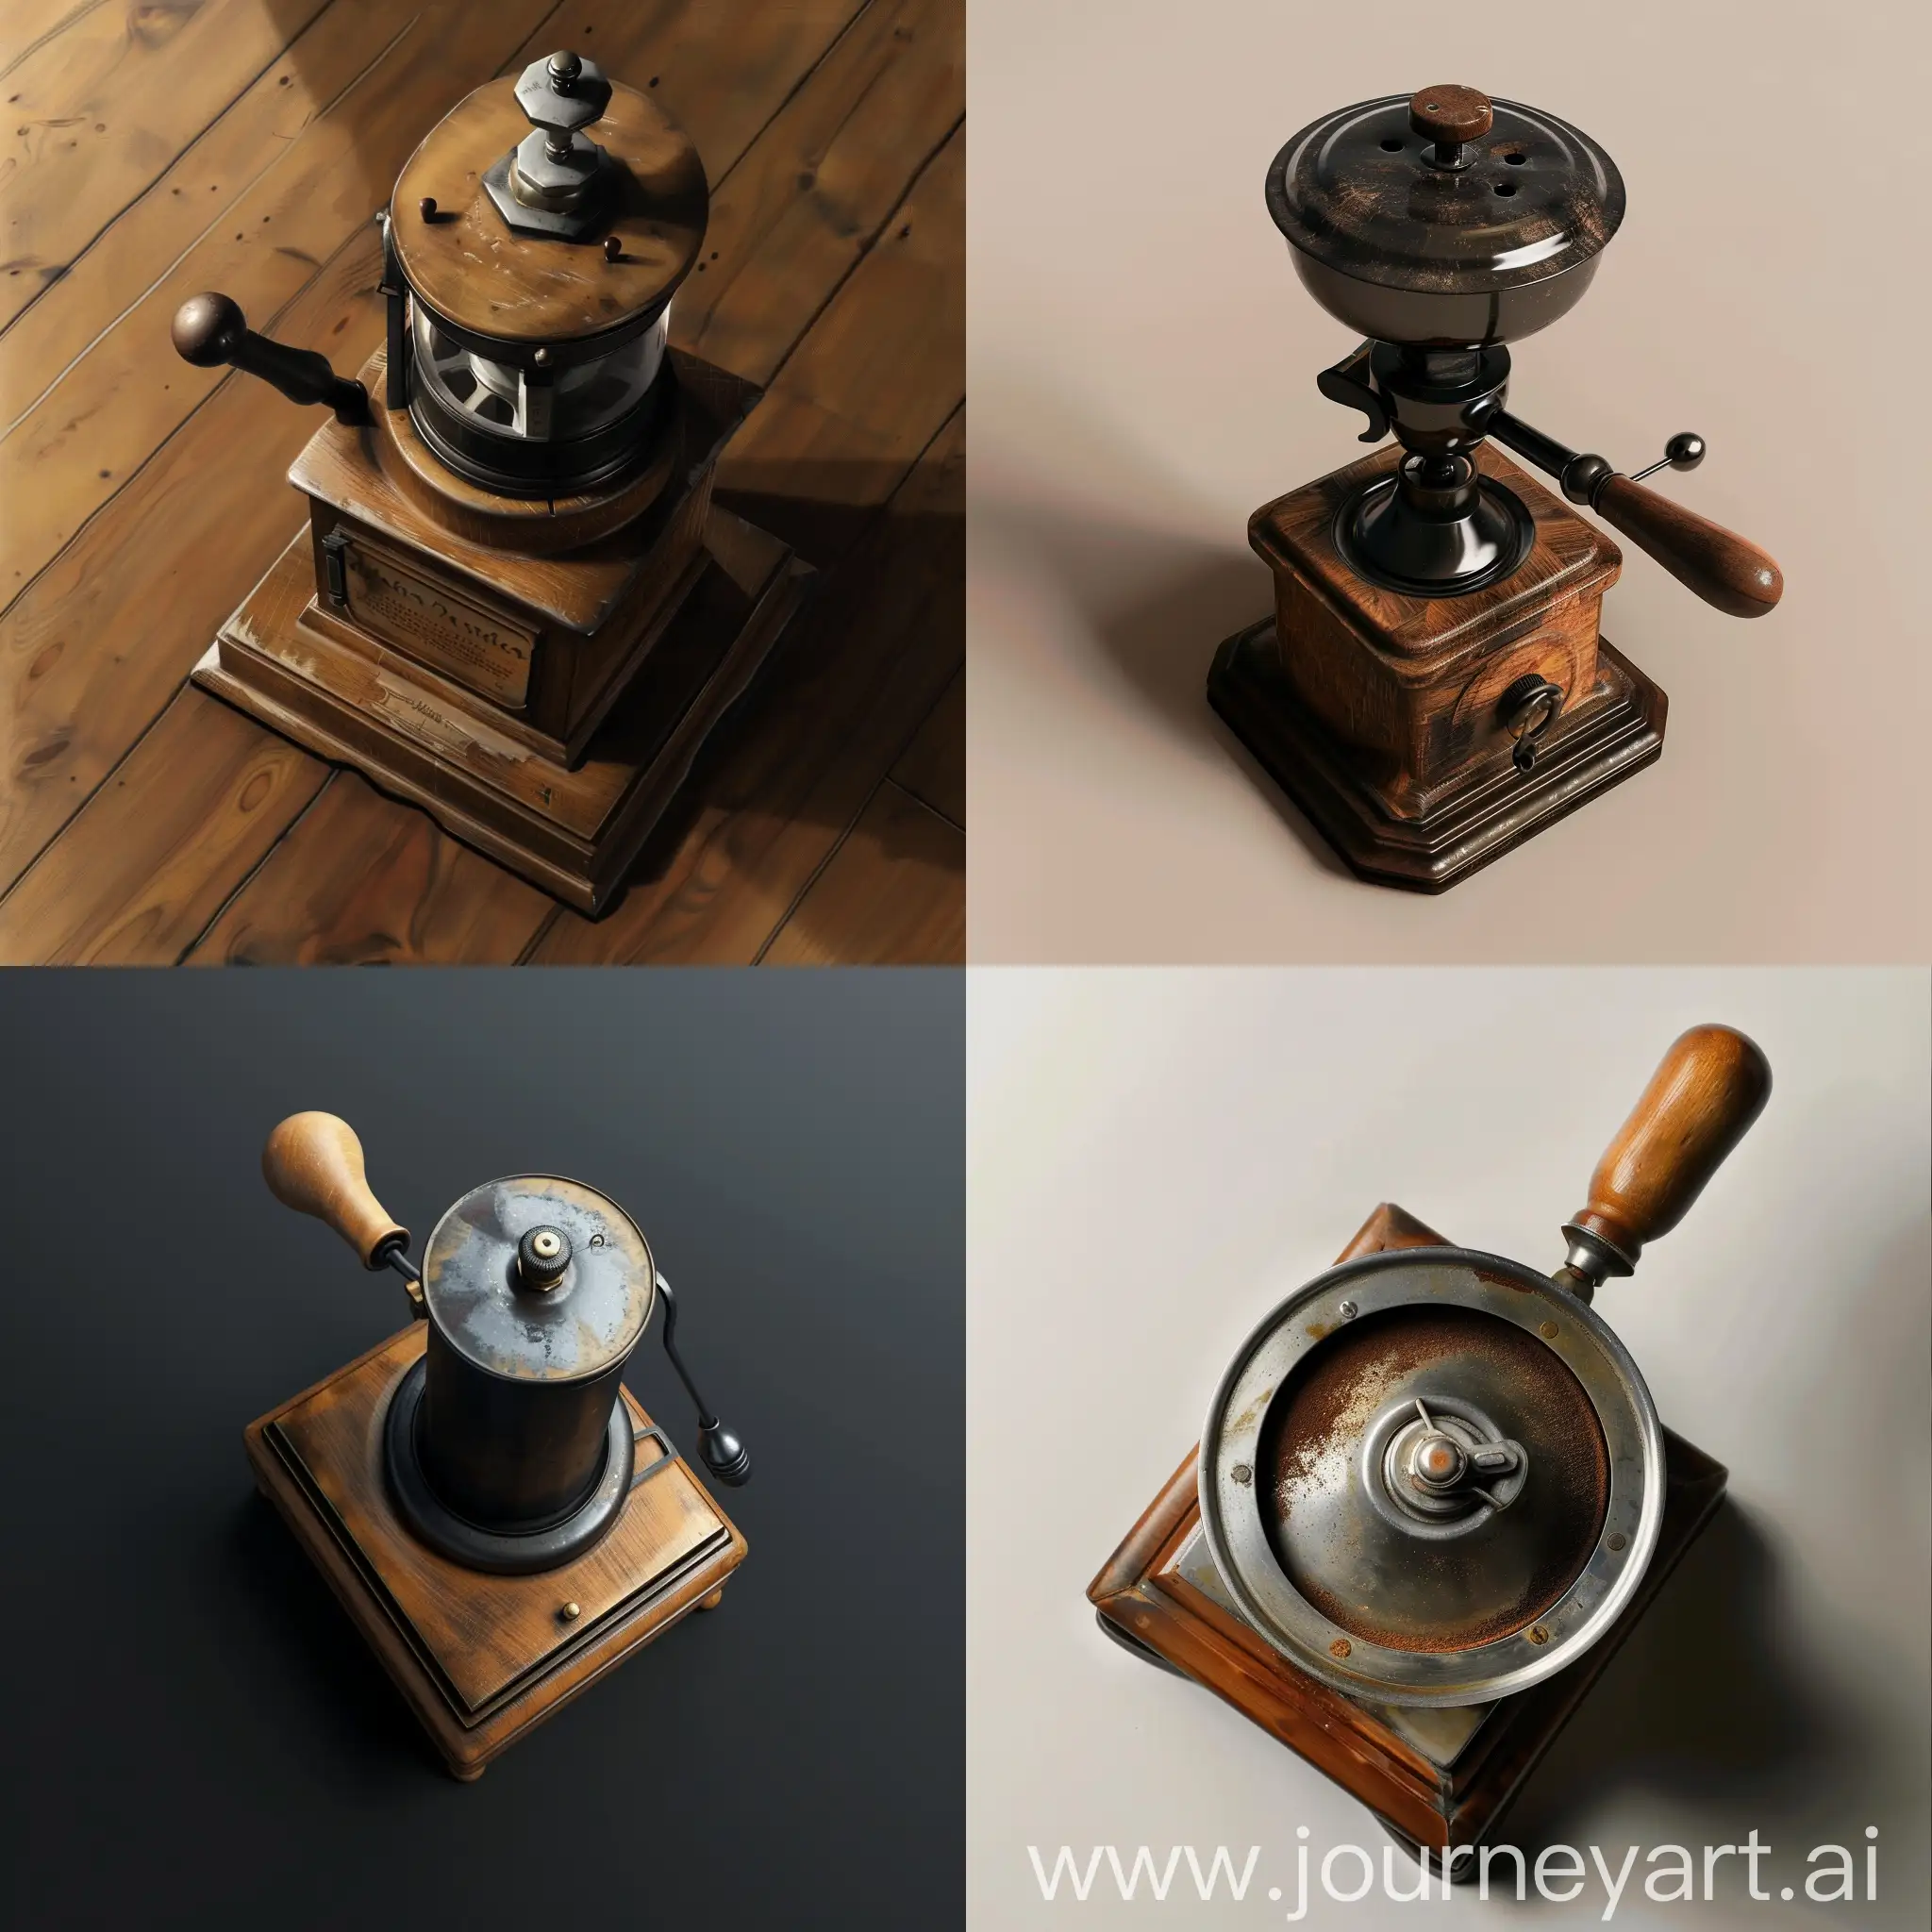 Vintage-Manual-Coffee-Grinder-in-Modern-Style-Perspective